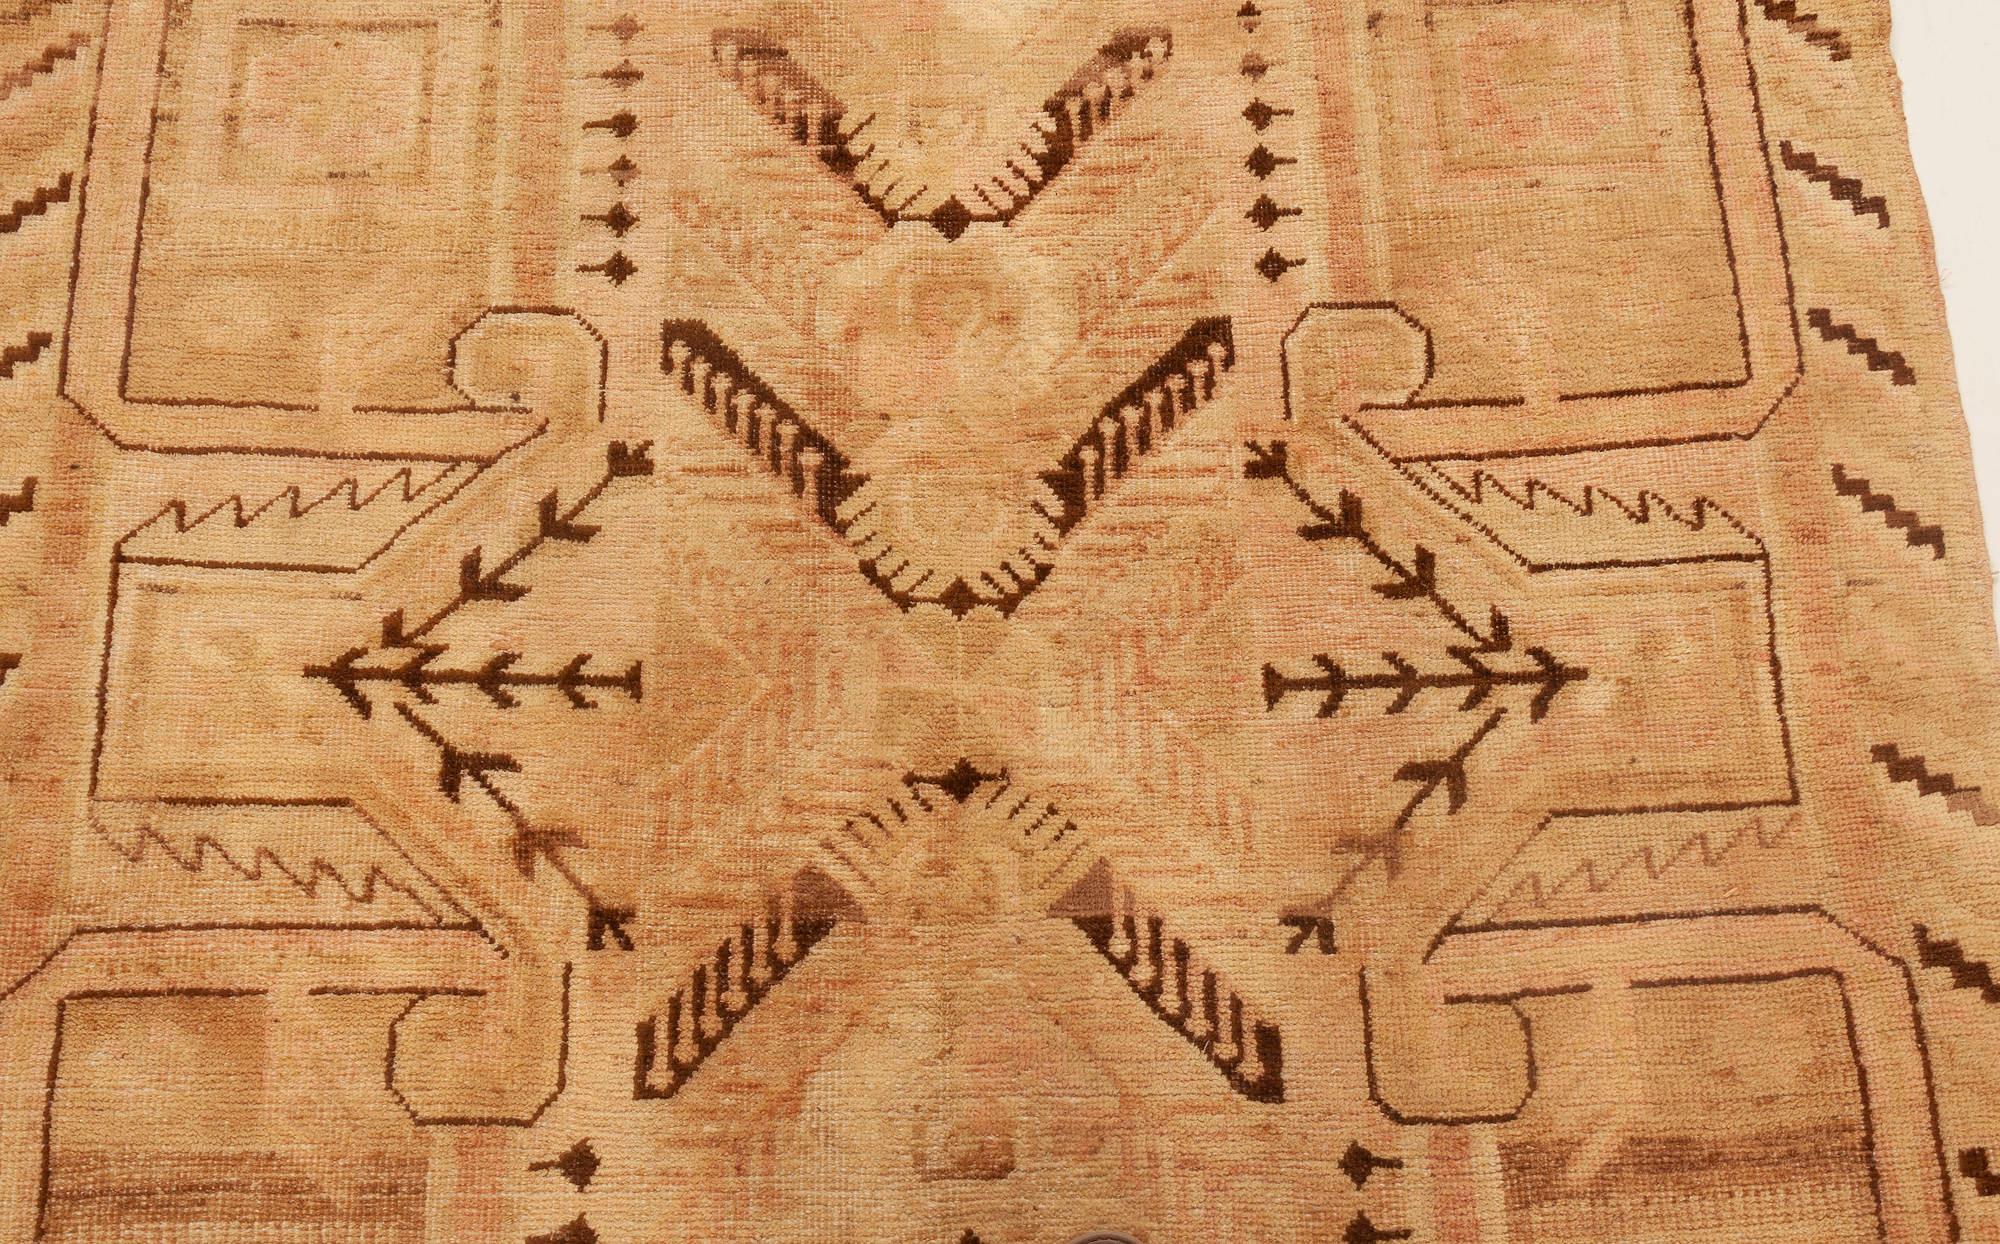 Midcentury Samarkand handwoven wool rug.
Size: 4'7